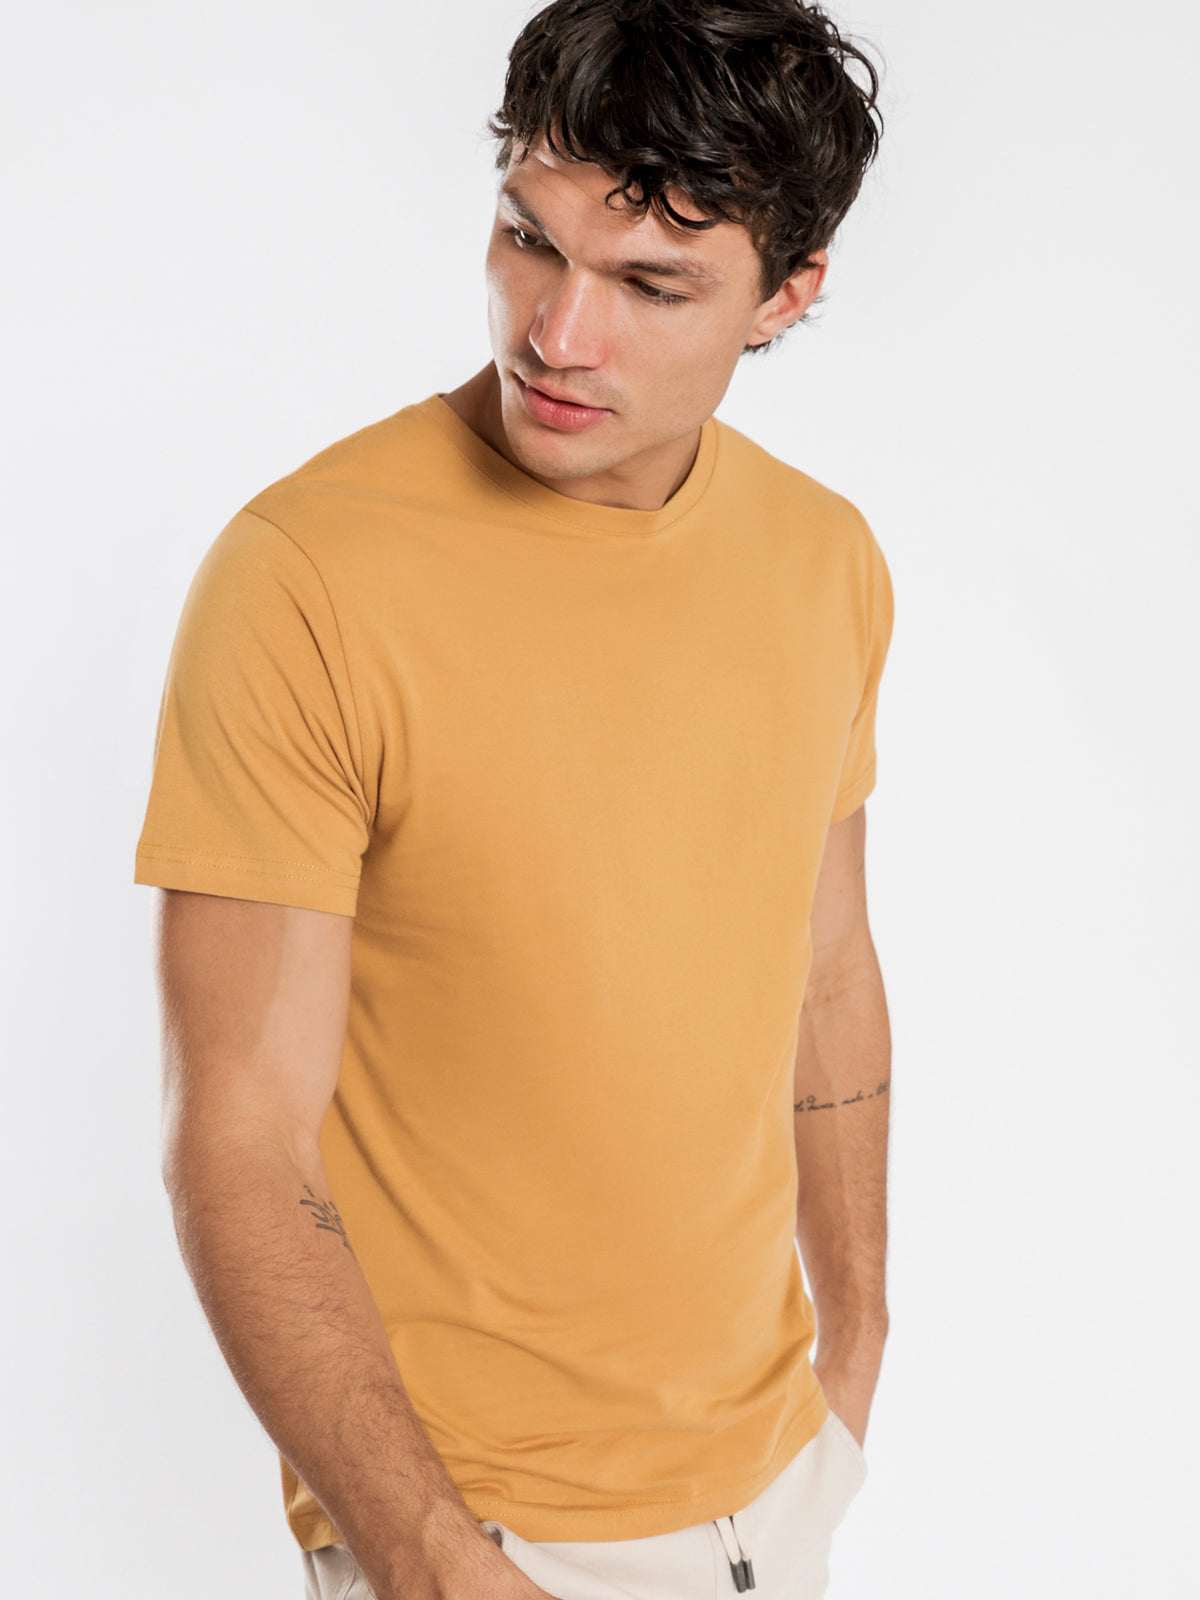 Basic Crew Short Sleeve T-Shirt in Mustard